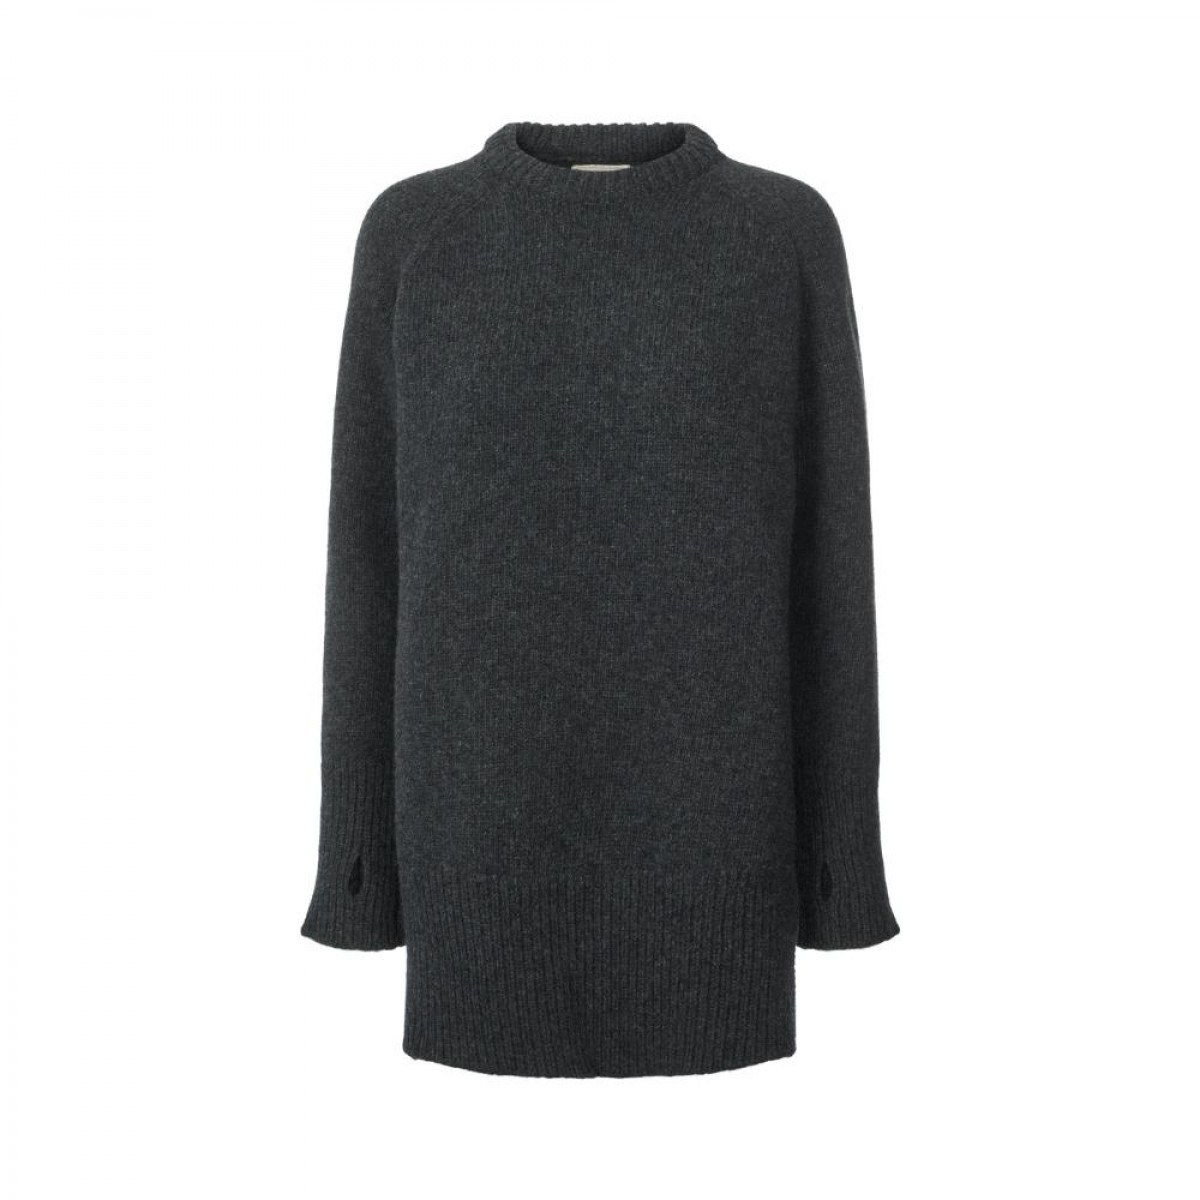 rossalina lambswool knit - dark grey - front